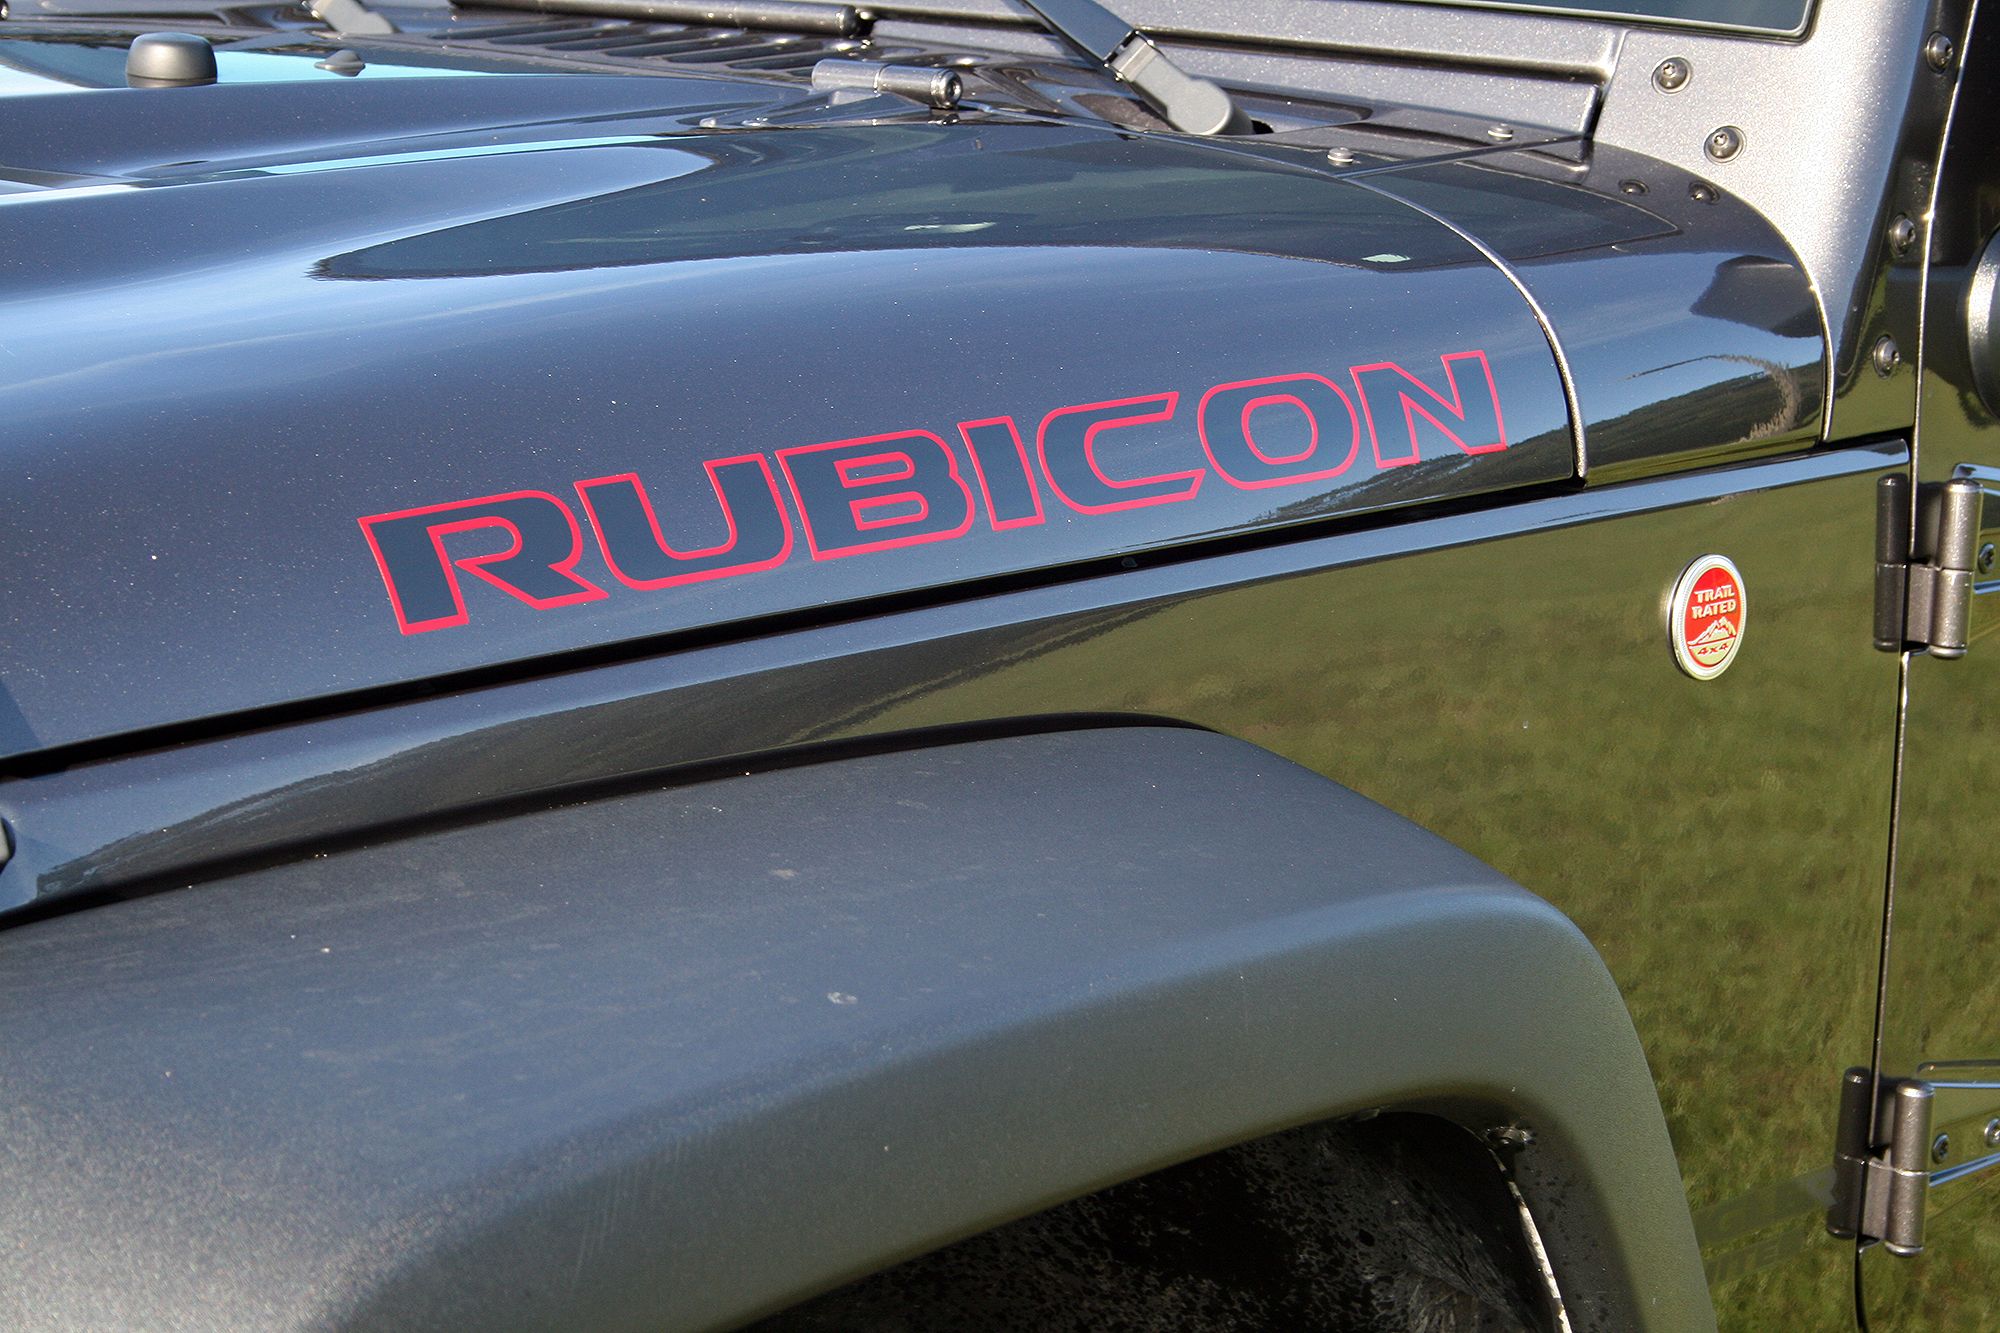 2017 Jeep Wrangler Unlimited Rubicon Hard Rock – Driven